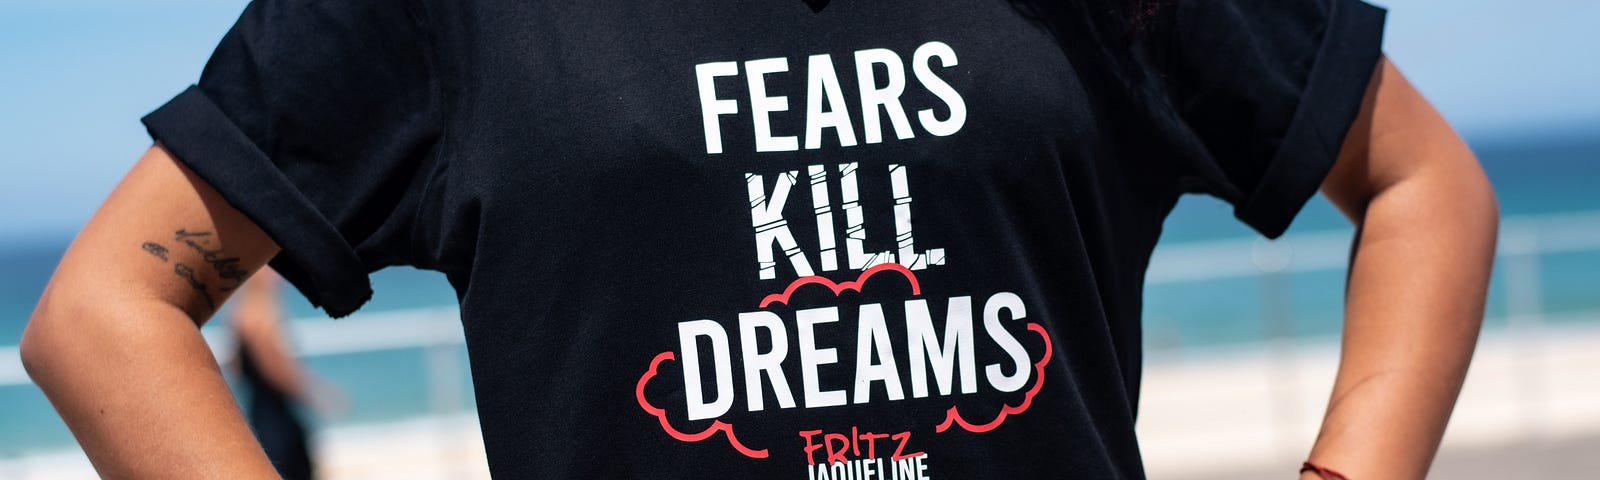 Fears Kill Dreams Tee Shirt